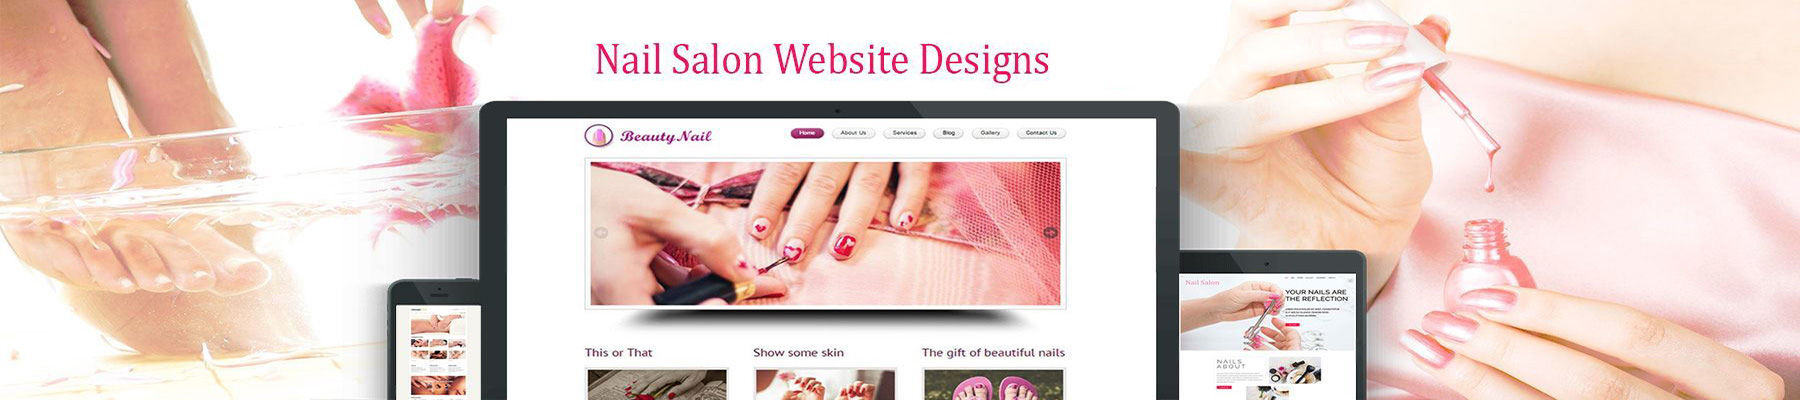 nail salon website design services